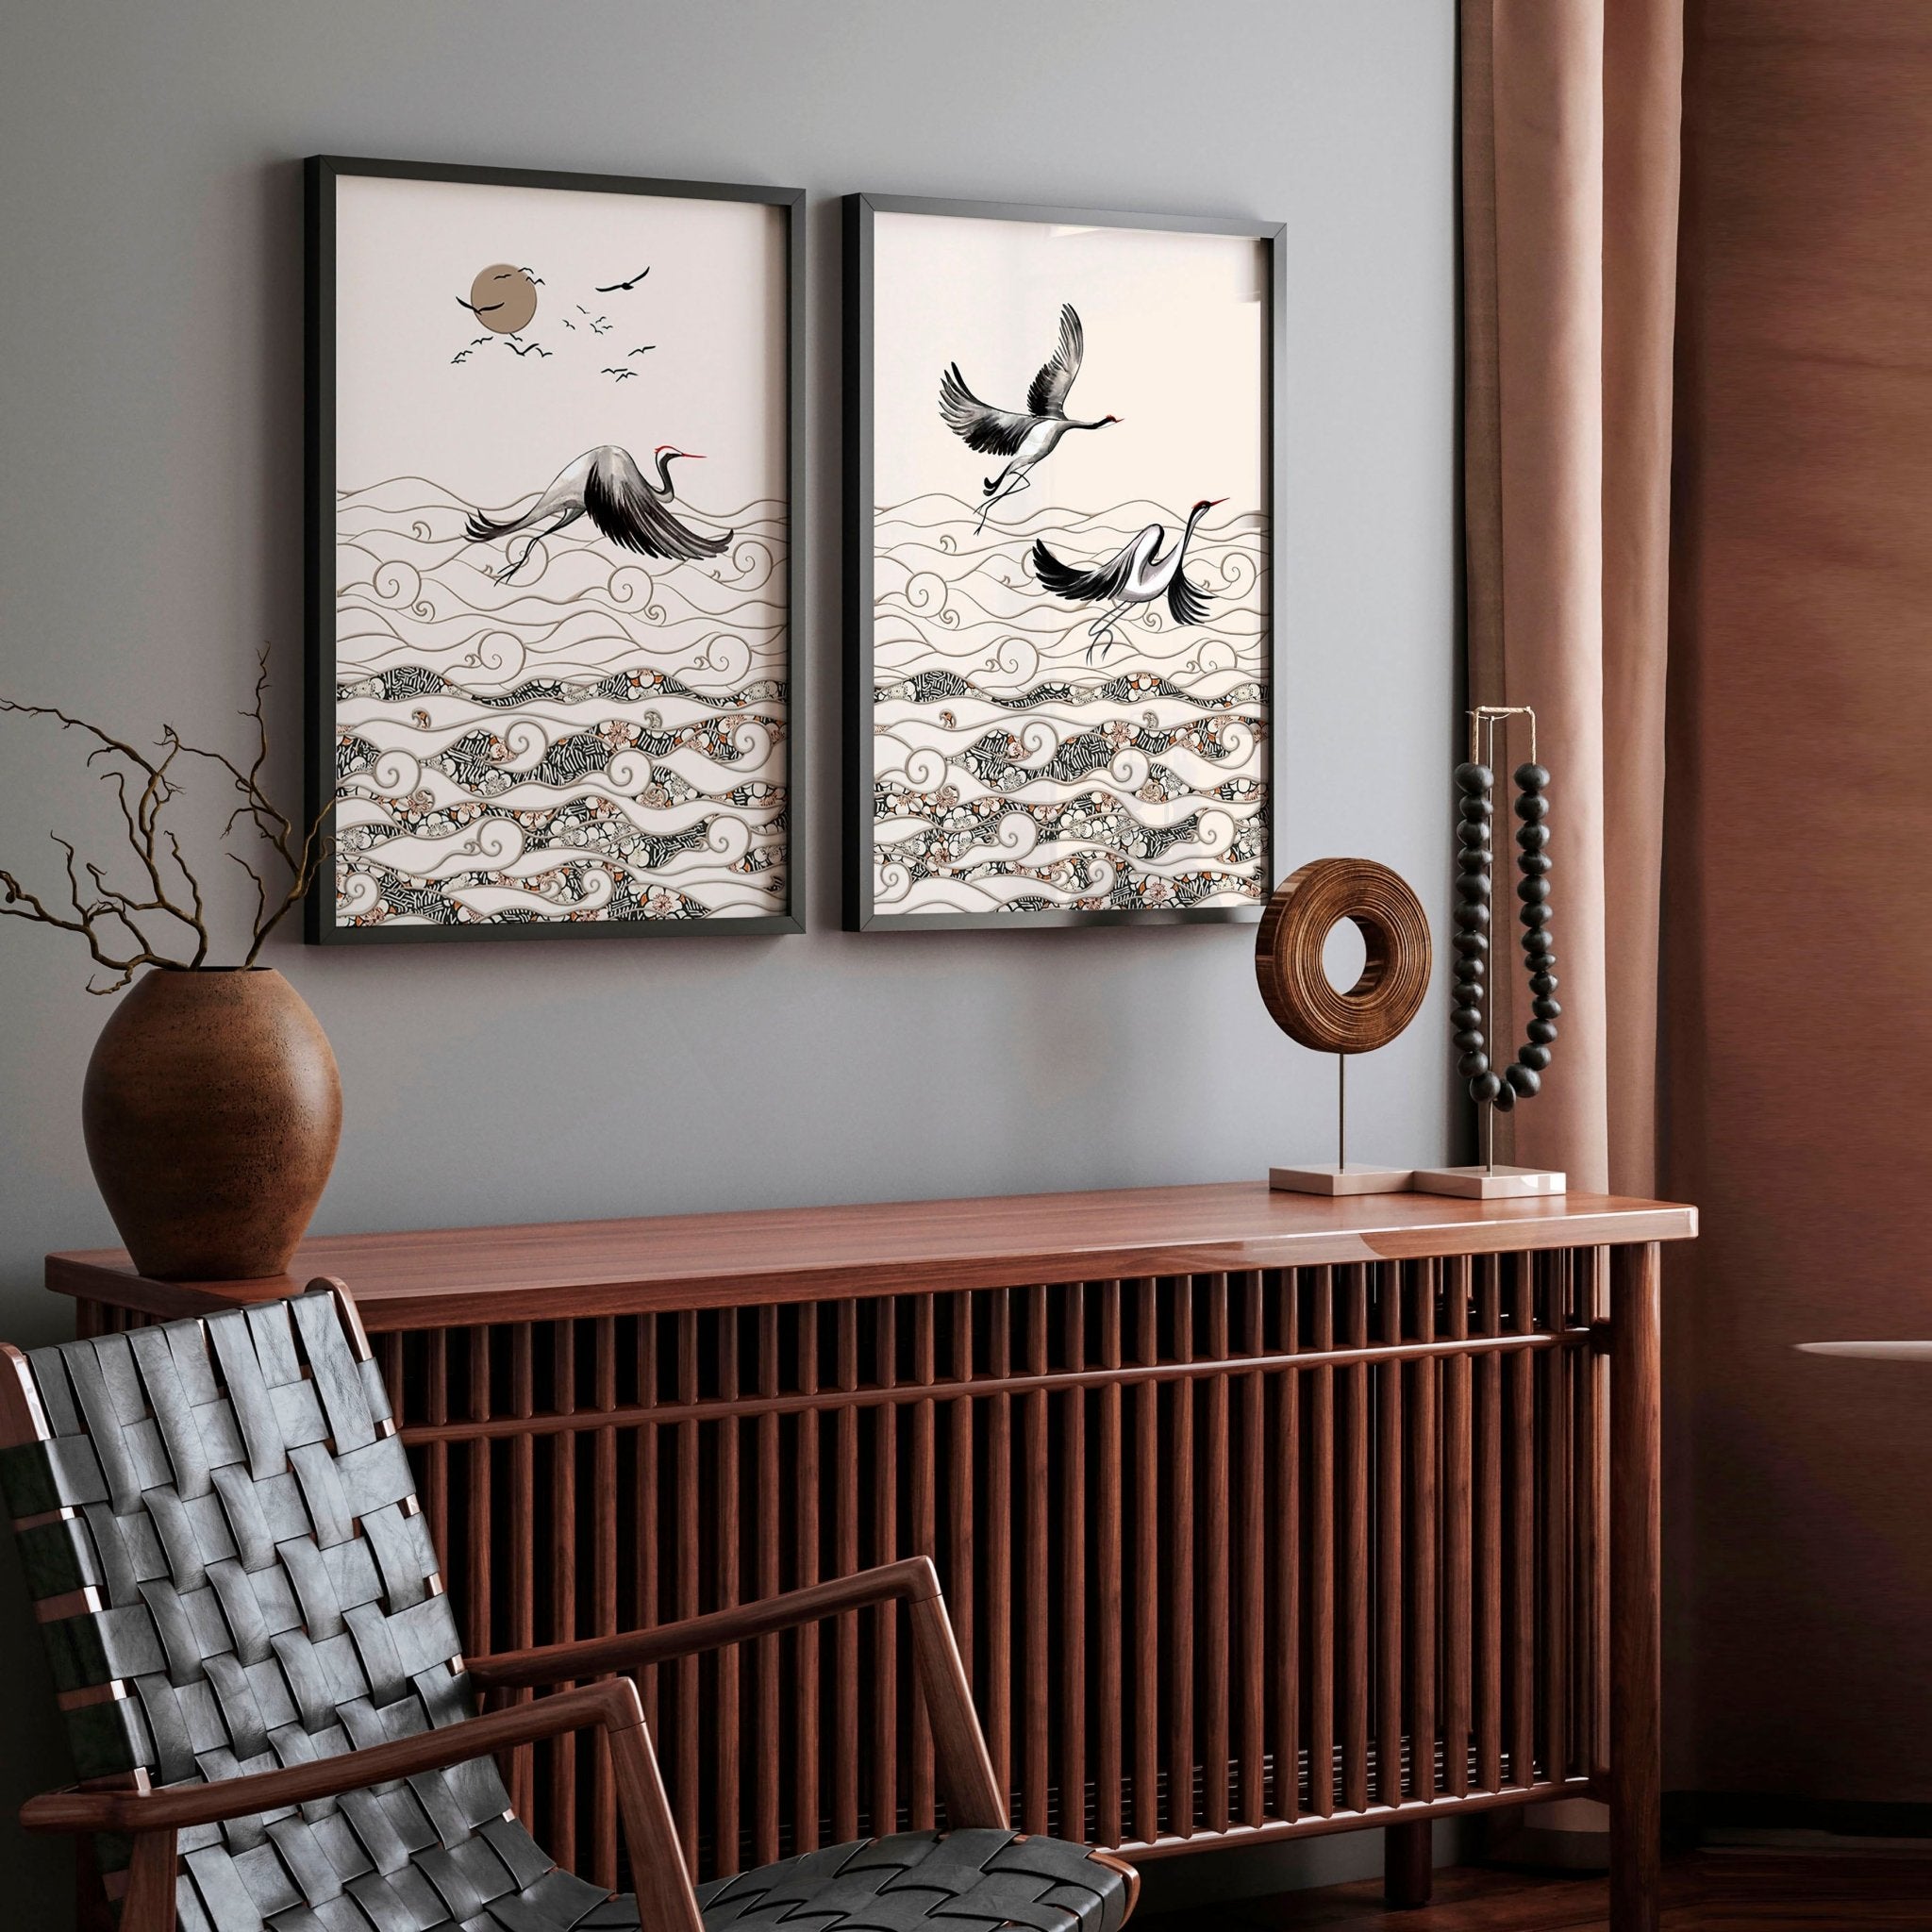 Japanese art print | Set of 2 wall art prints for living room